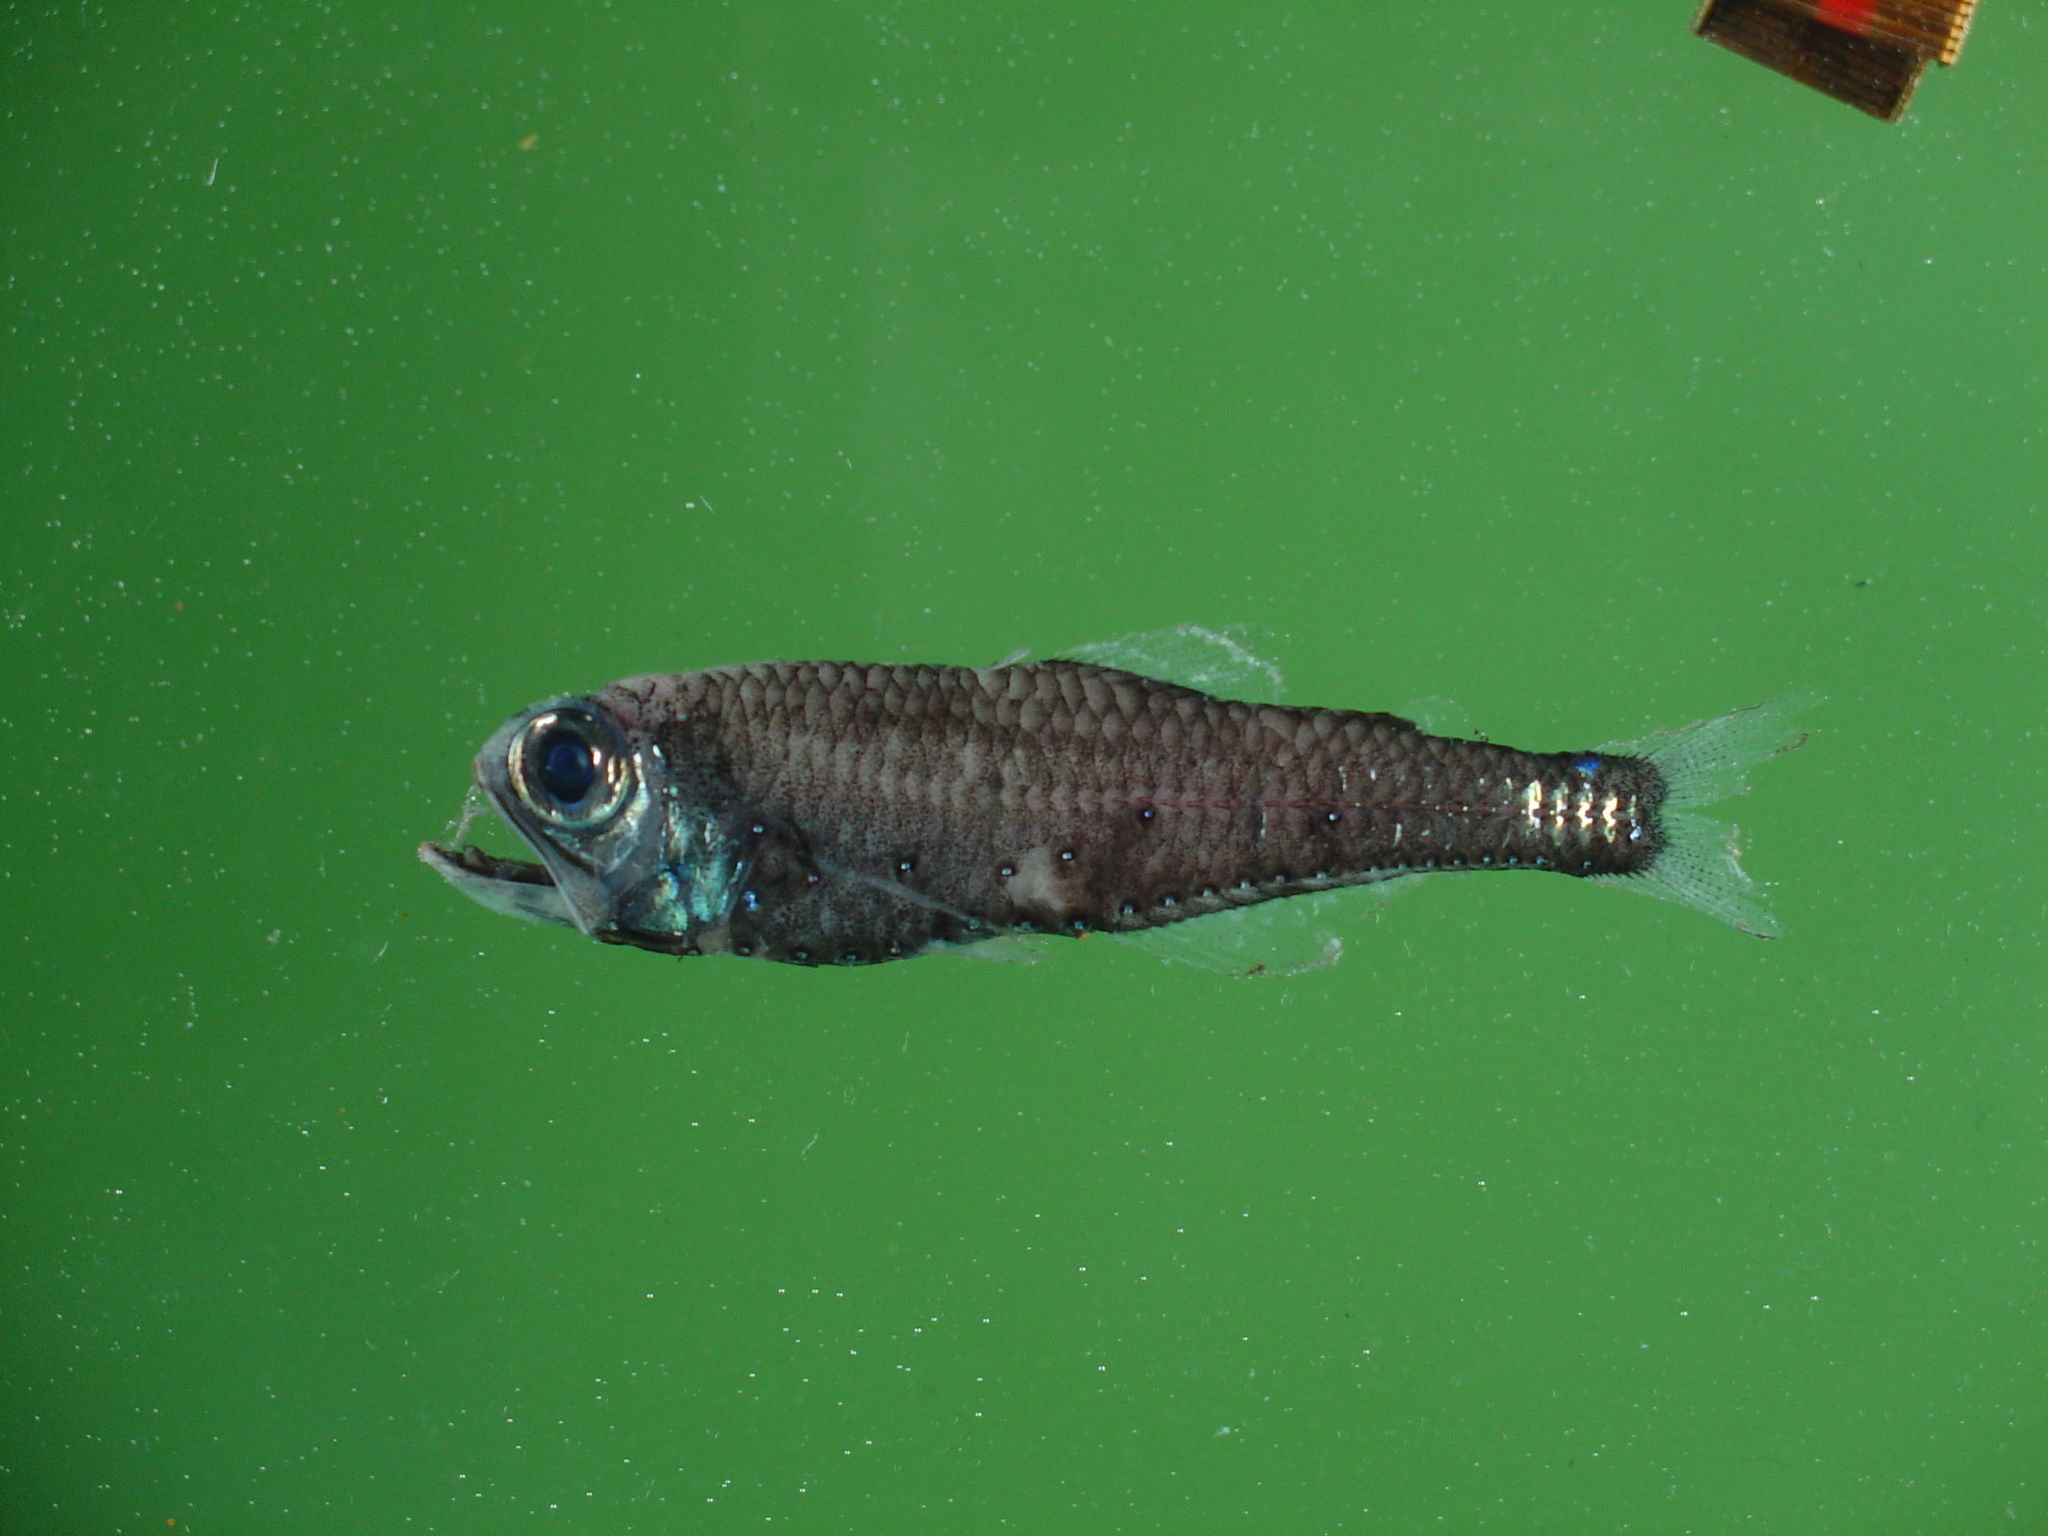 Shedding light on lanternfish - British Antarctic Survey